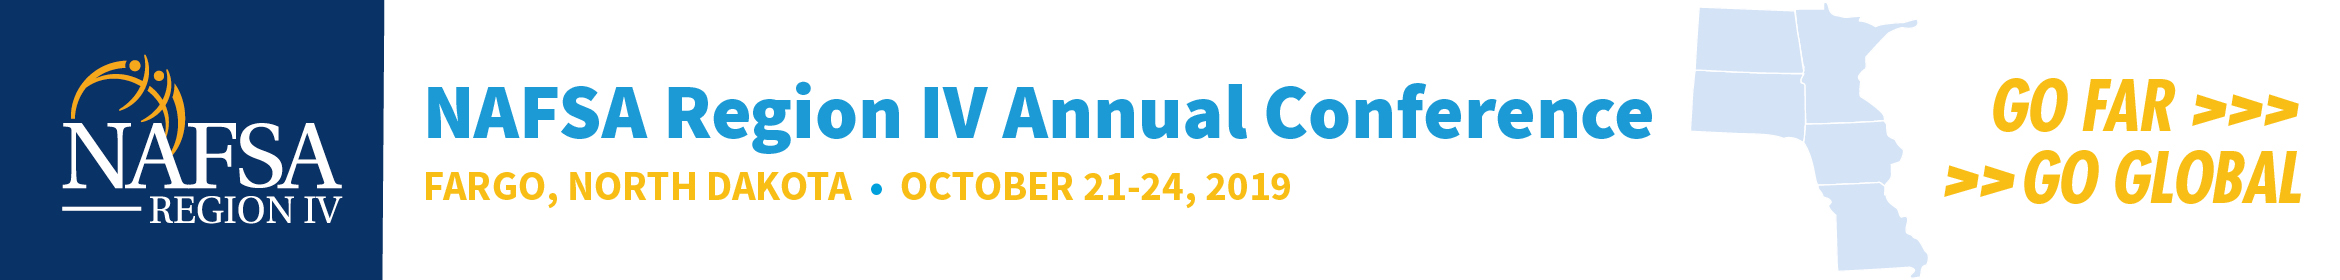 2019 NAFSA Region IV Conference Main banner